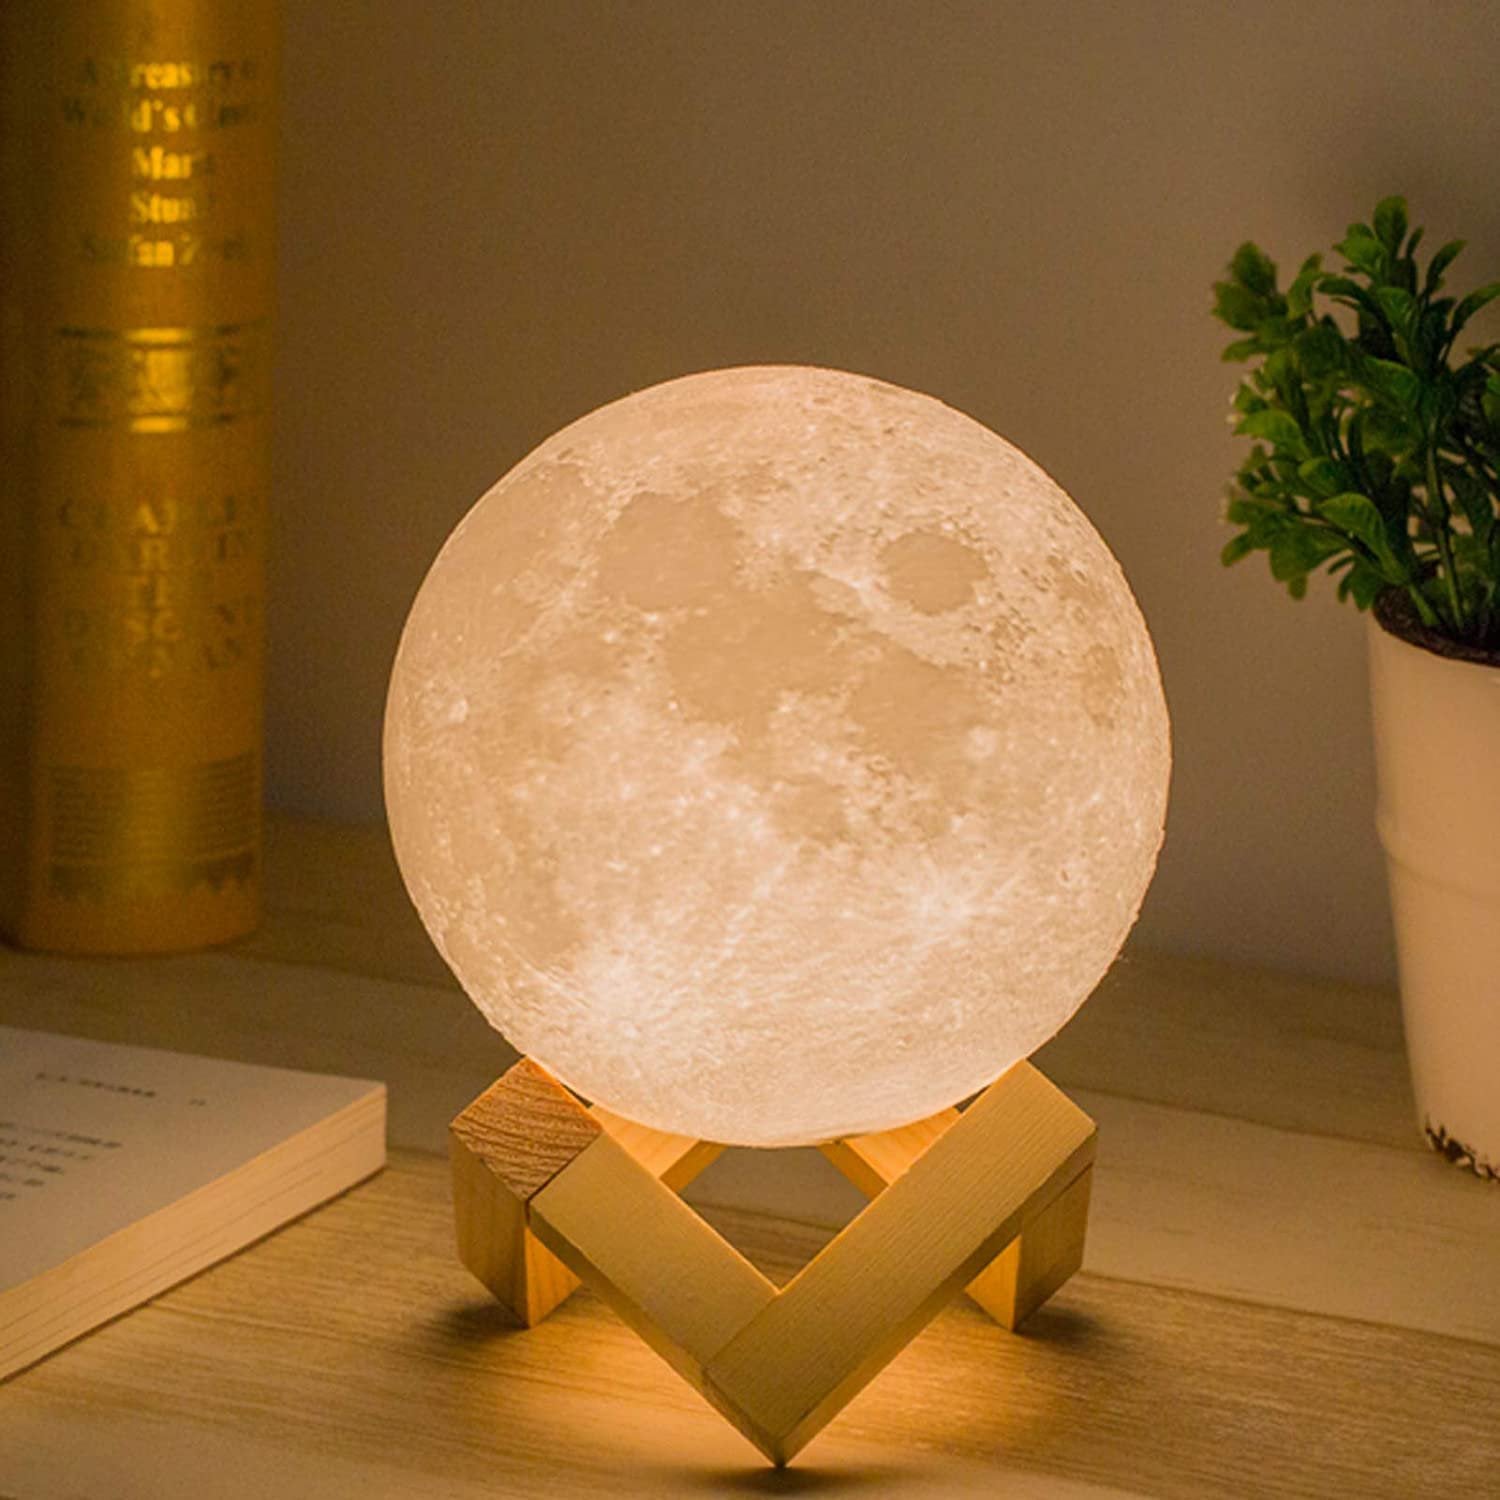 Enchanting Moon Night Lamp